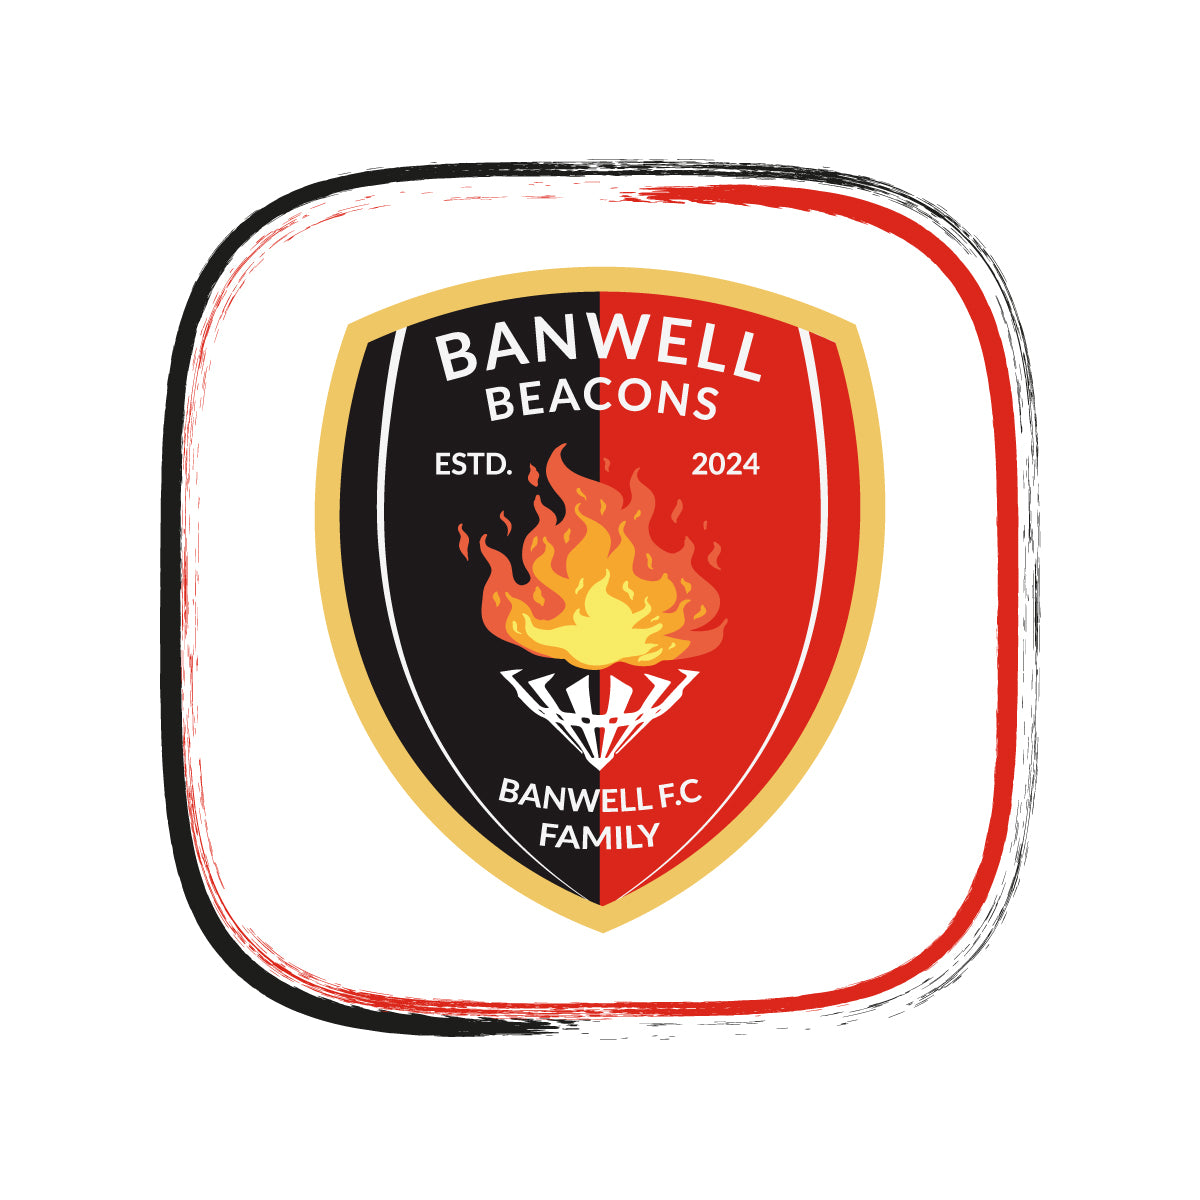 Banwell Beacons